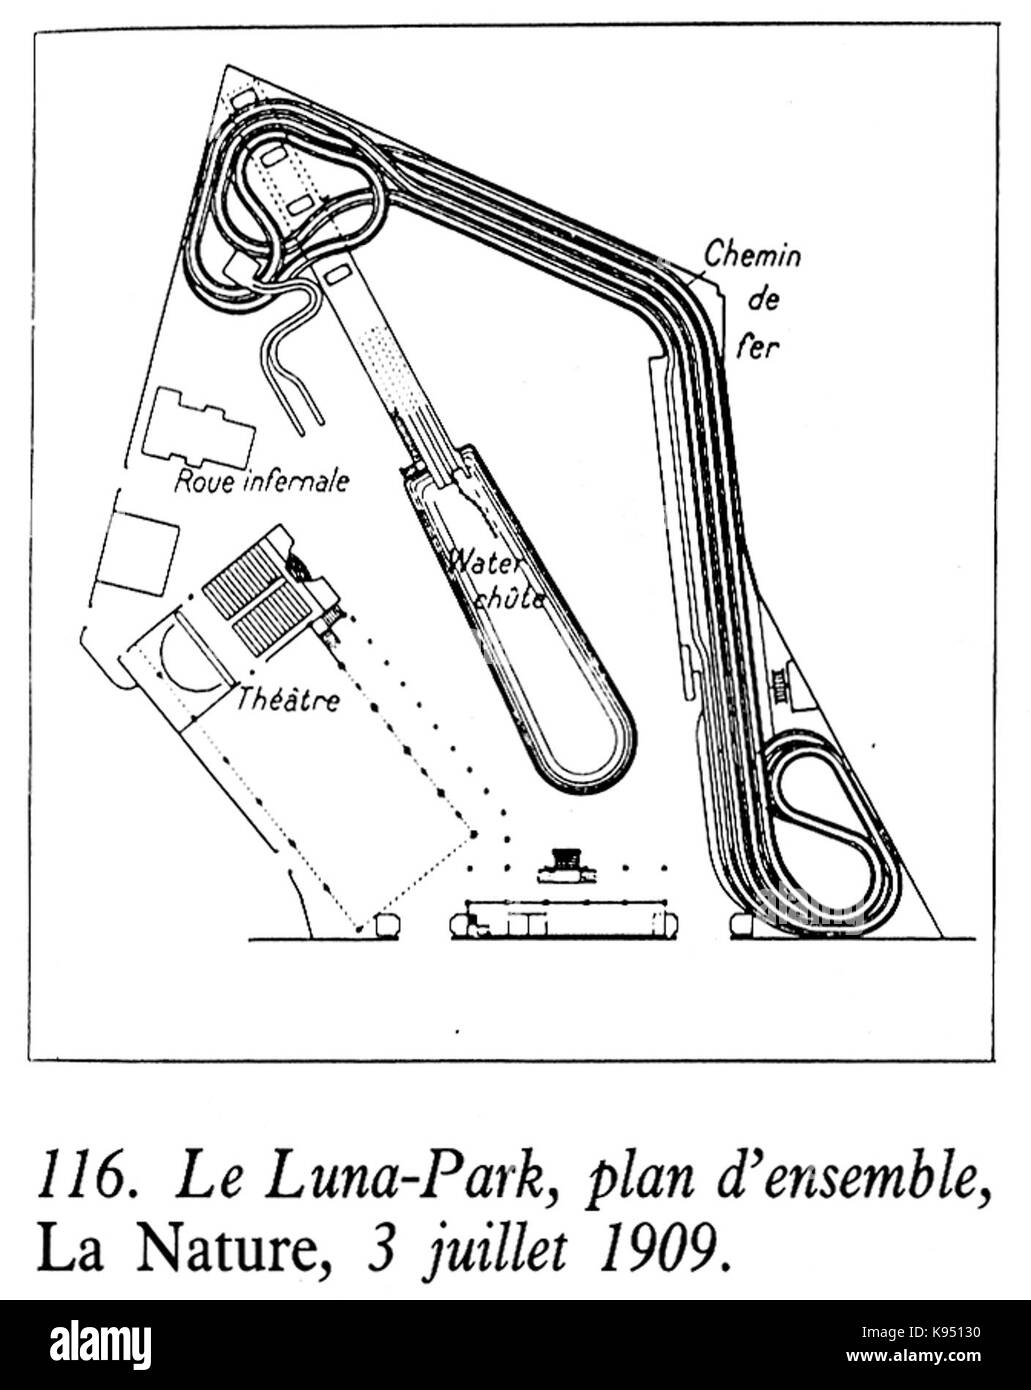 Luna park plan 1909 Stock Photo - Alamy